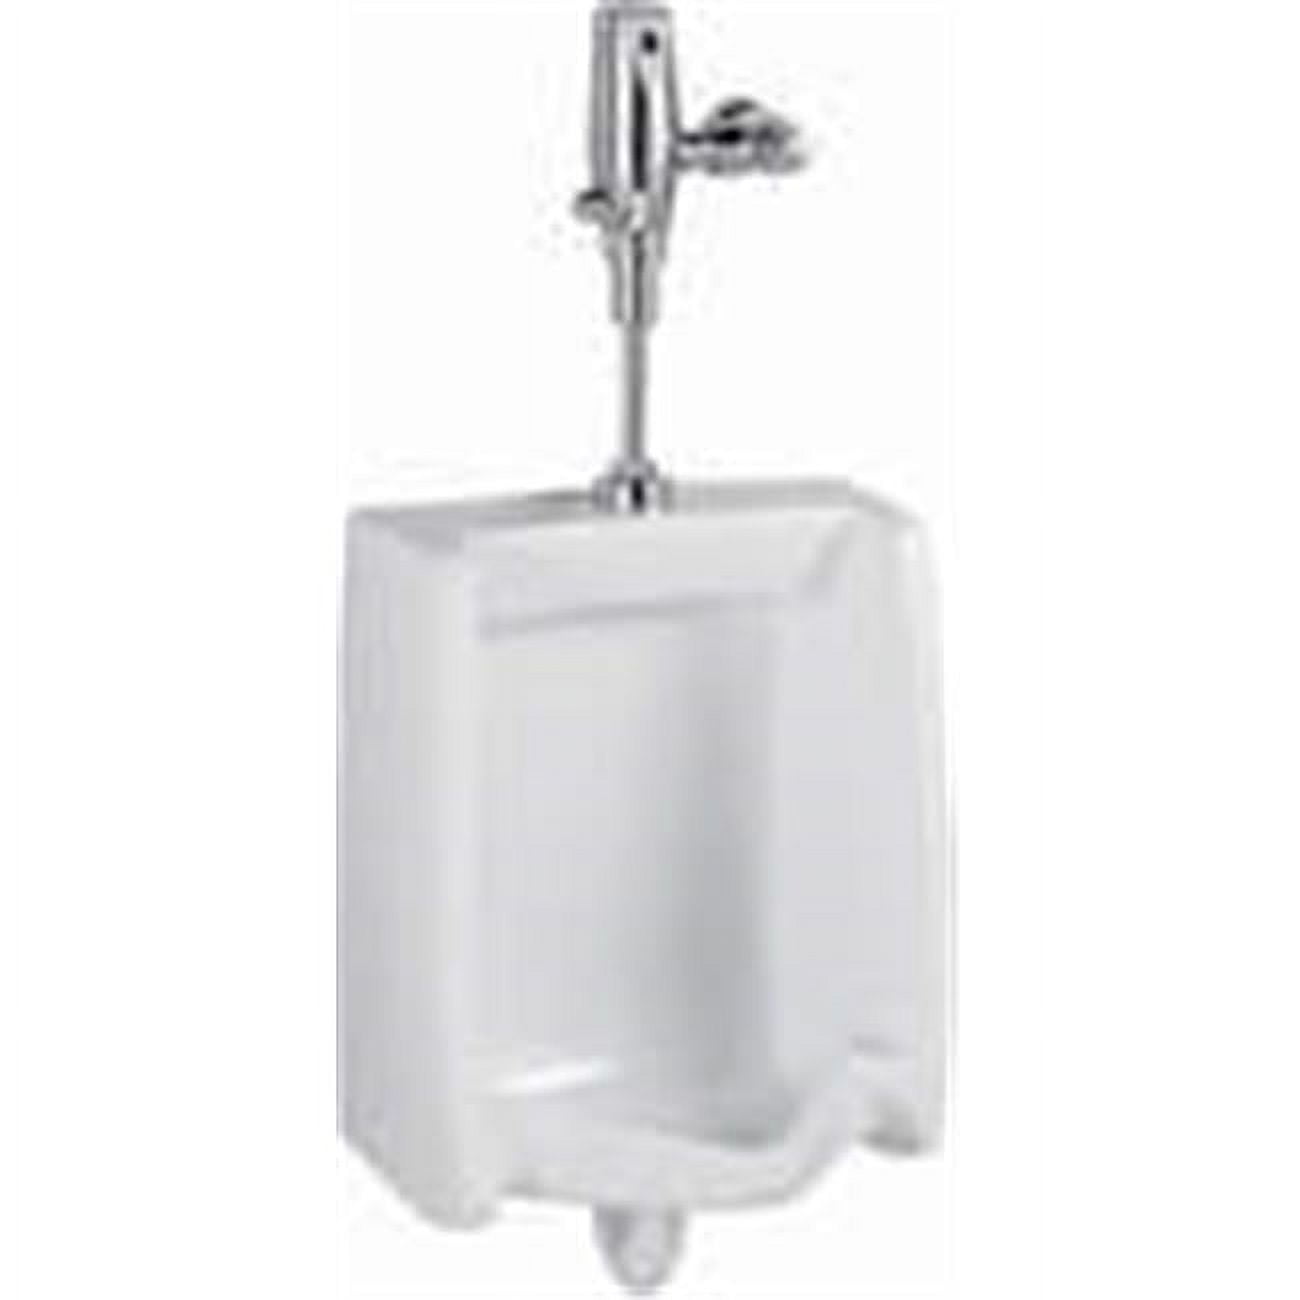 6550505.02 Selectronic Flush Valve Toilet Seat System